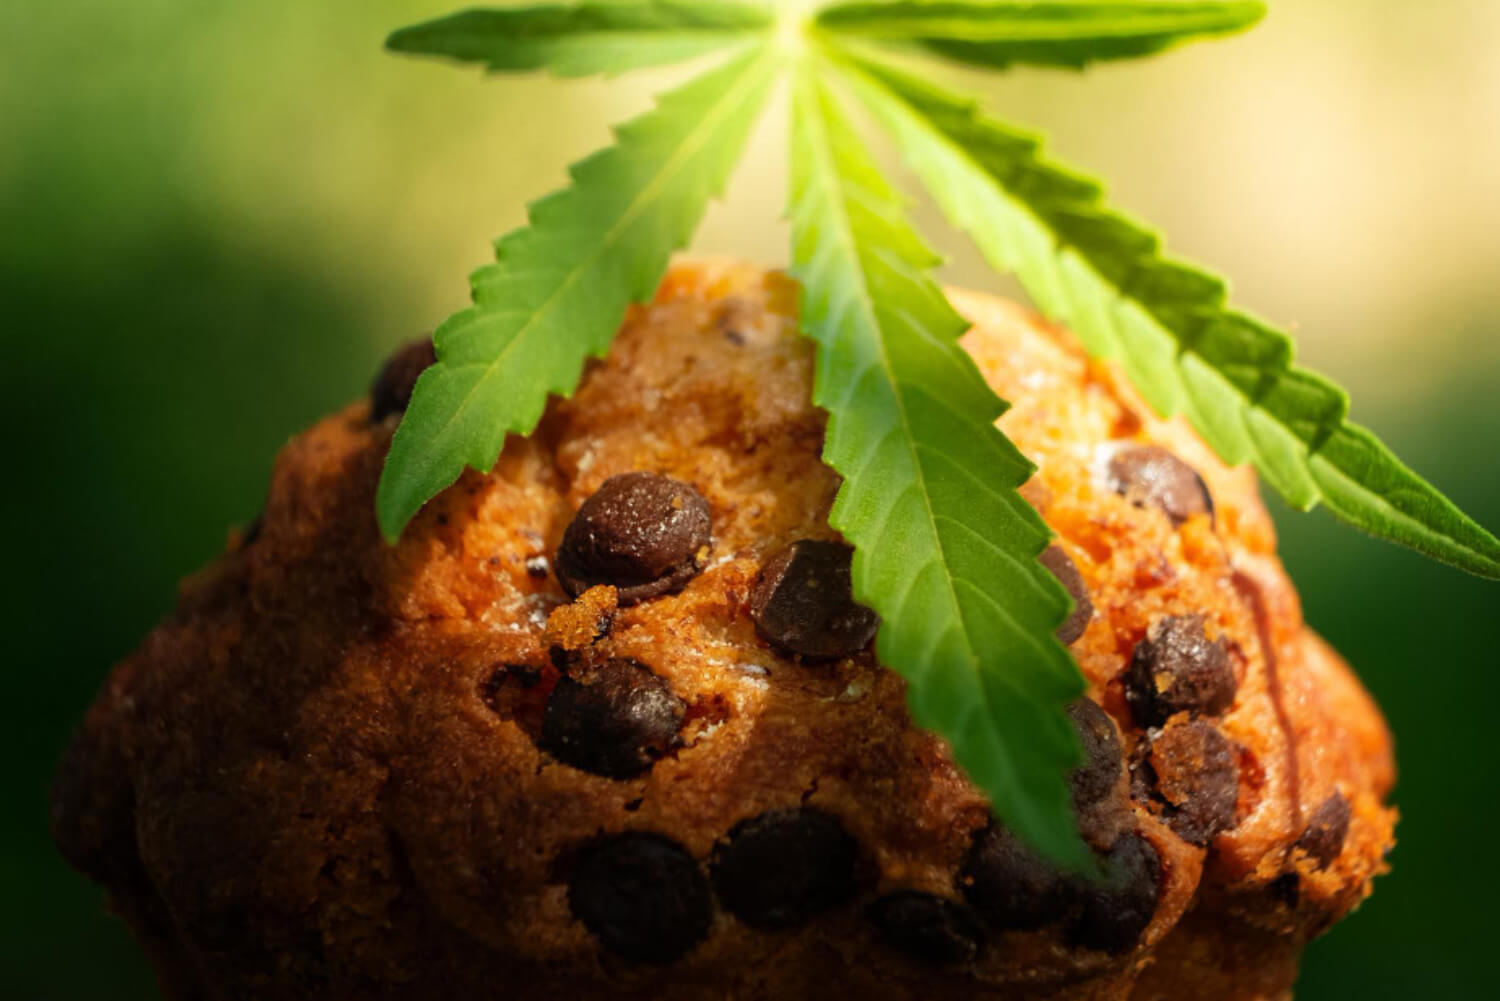 marijuana cookie